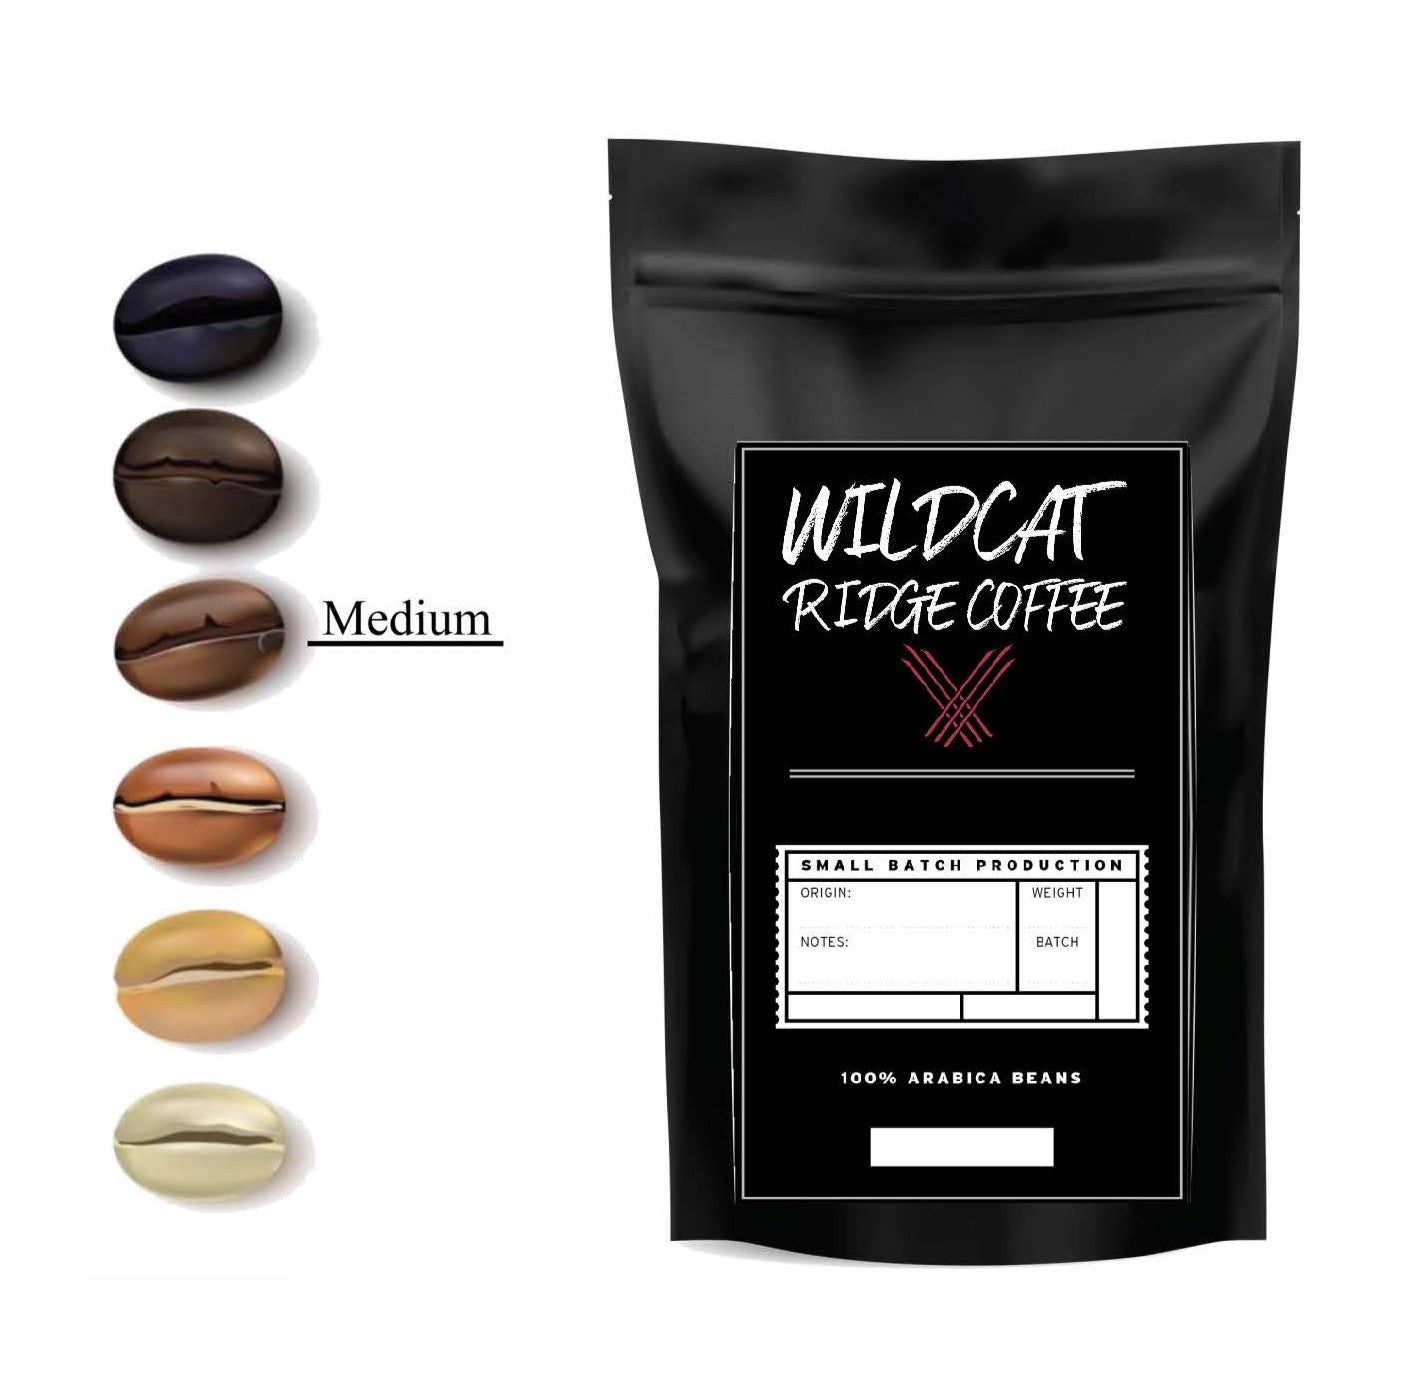 Brazil Cerrado - Wildcat Ridge Coffee Single Origin